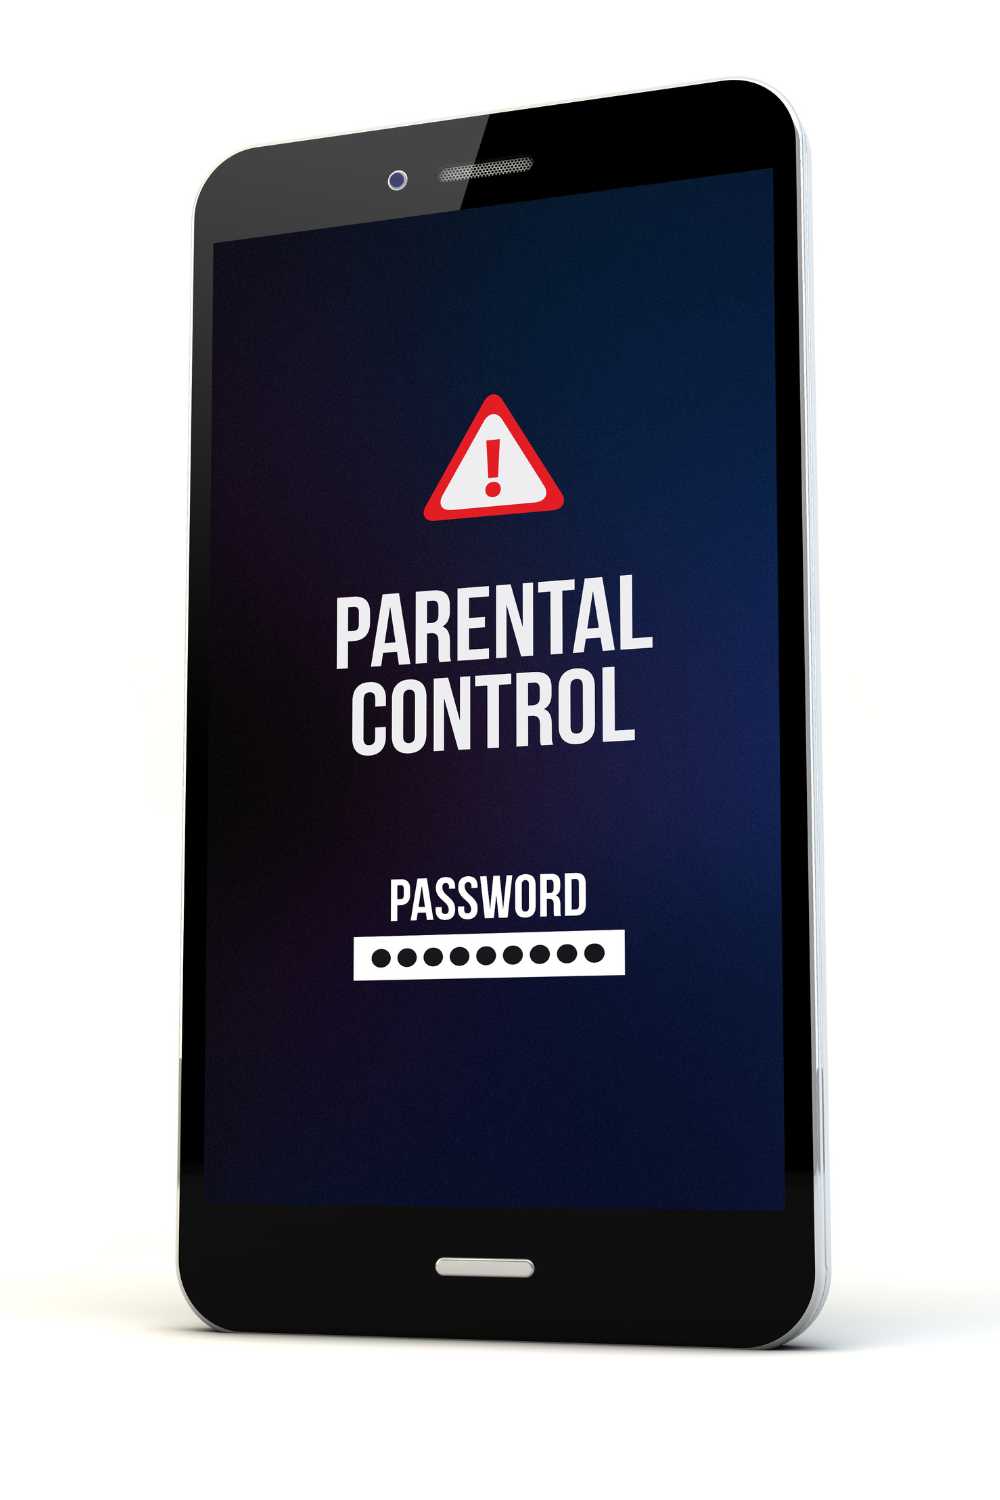 parental control, Internet safety for teens